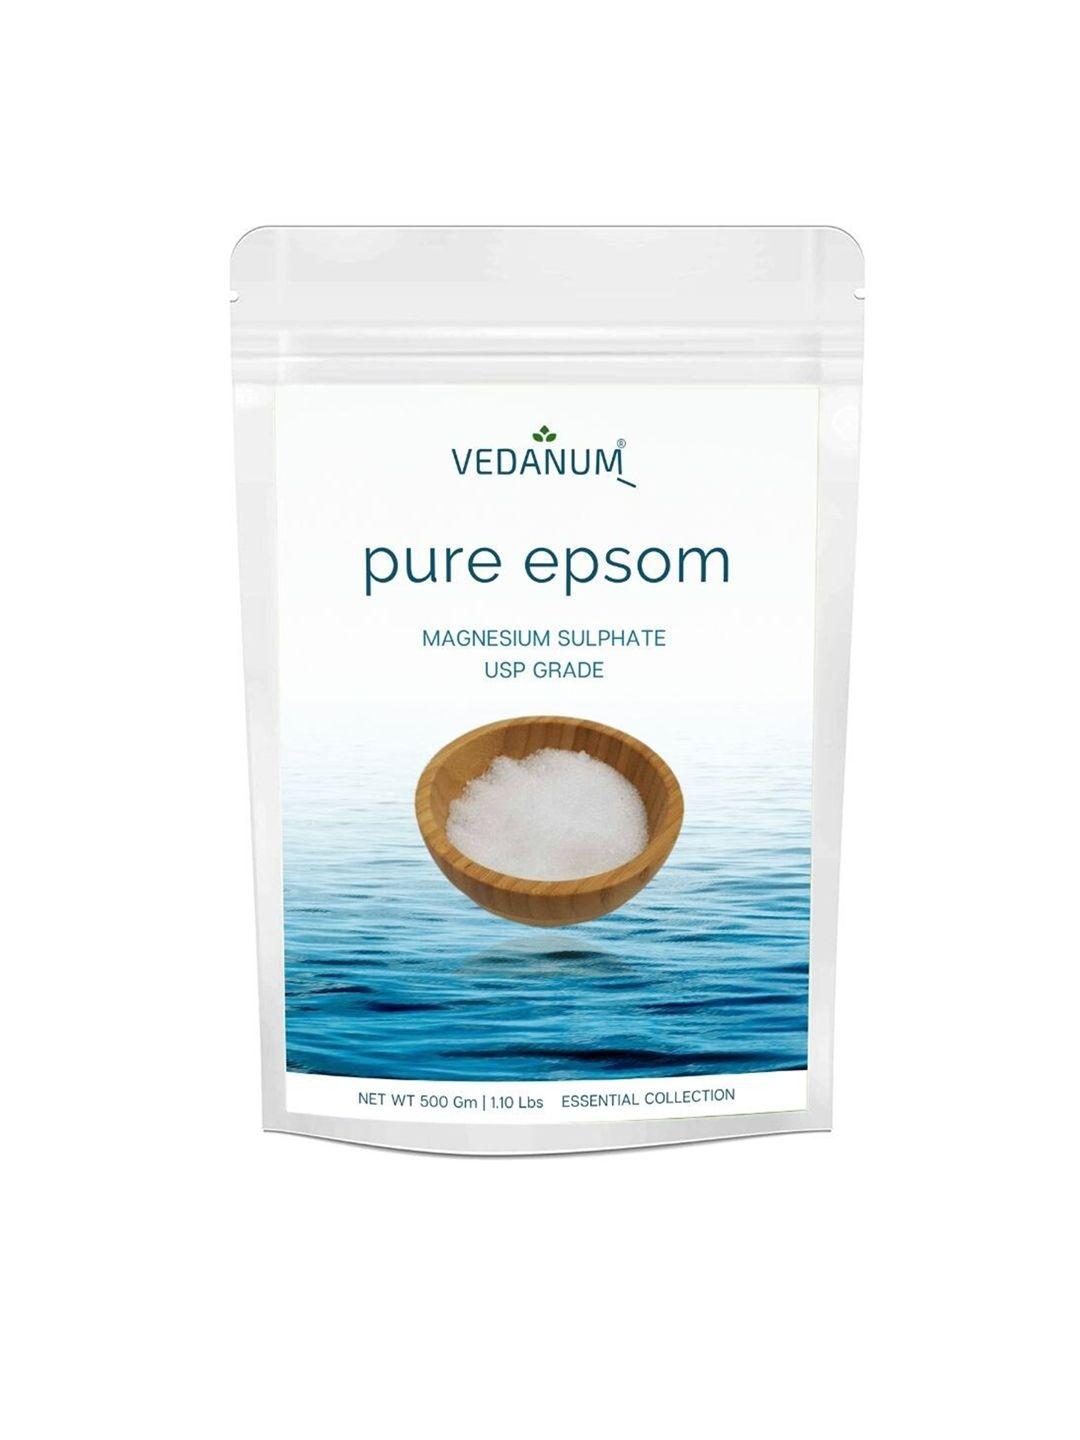 vedanum magnesium sulphate usp grade pure epsom bath salt - 500 gm